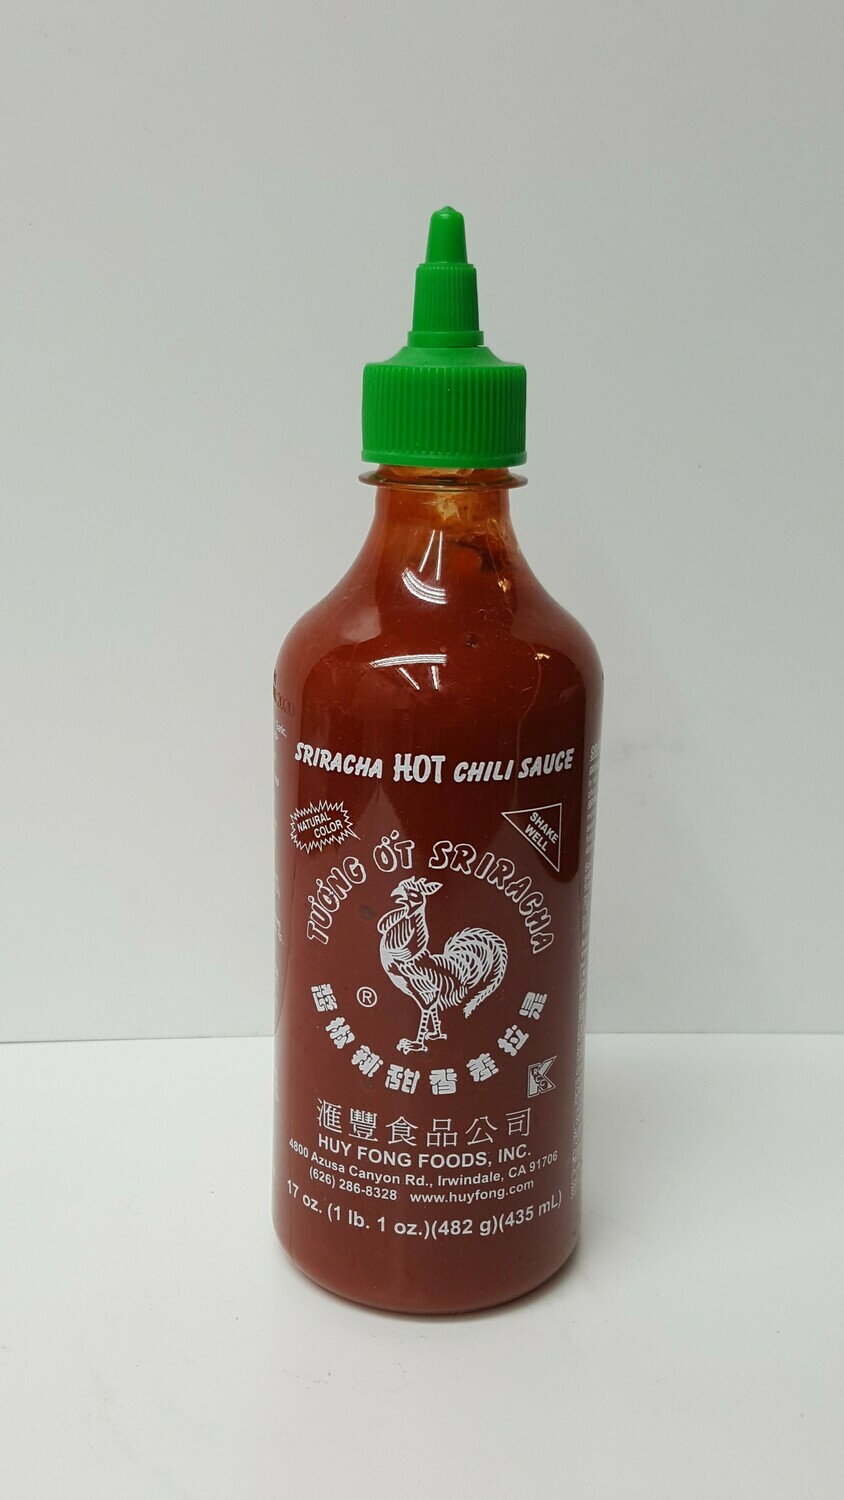 Tuong Ot Sriracha HOT CHILI SAUCE 435 ml